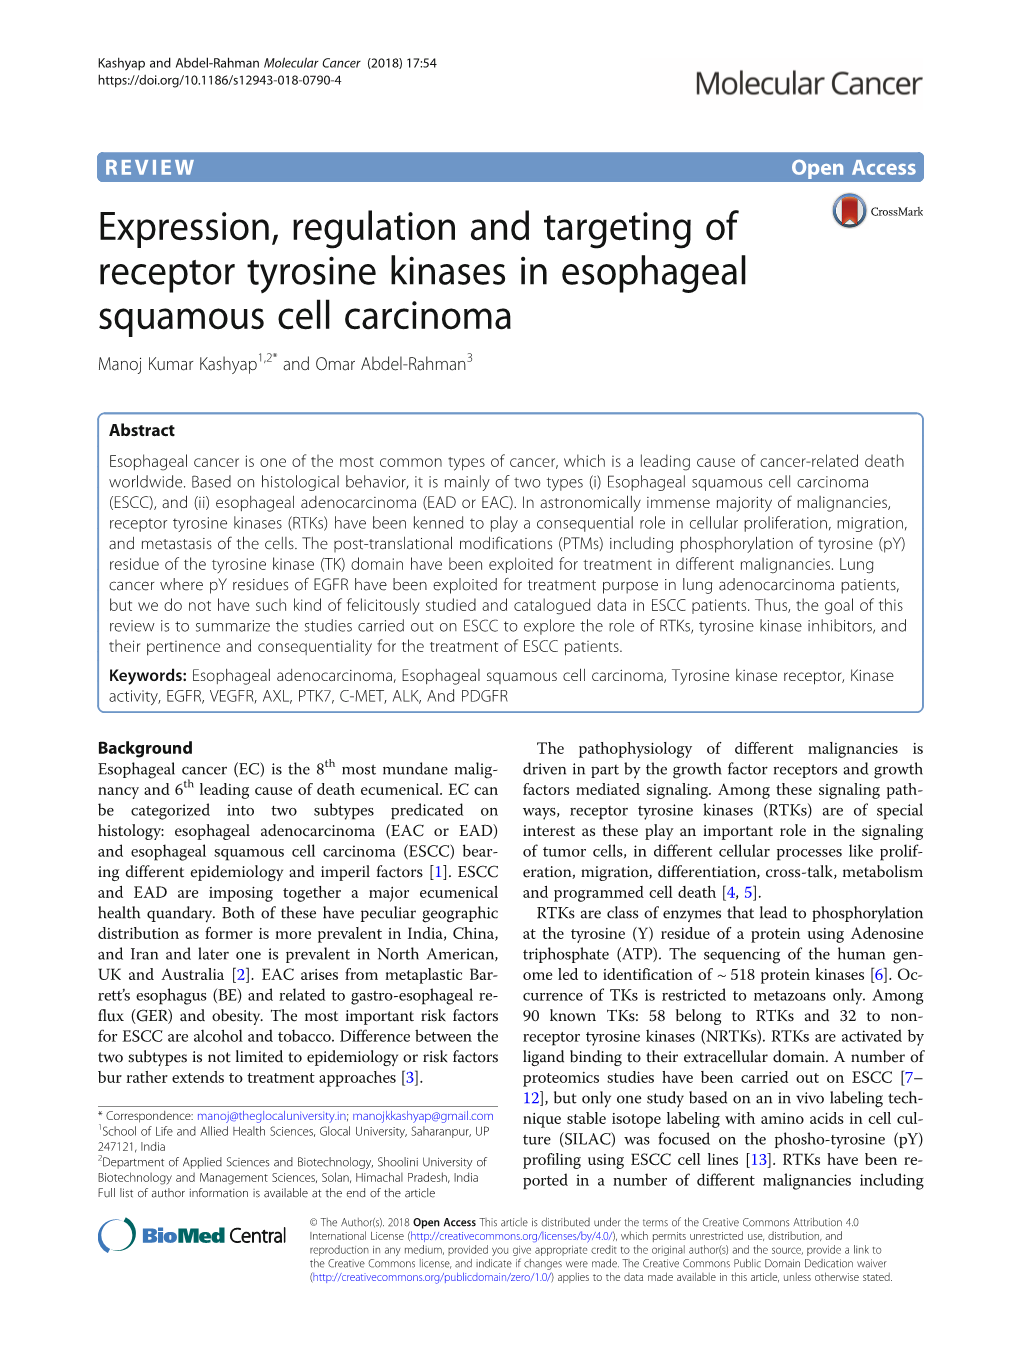 Expression, Regulation and Targeting of Receptor Tyrosine Kinases in Esophageal Squamous Cell Carcinoma Manoj Kumar Kashyap1,2* and Omar Abdel-Rahman3